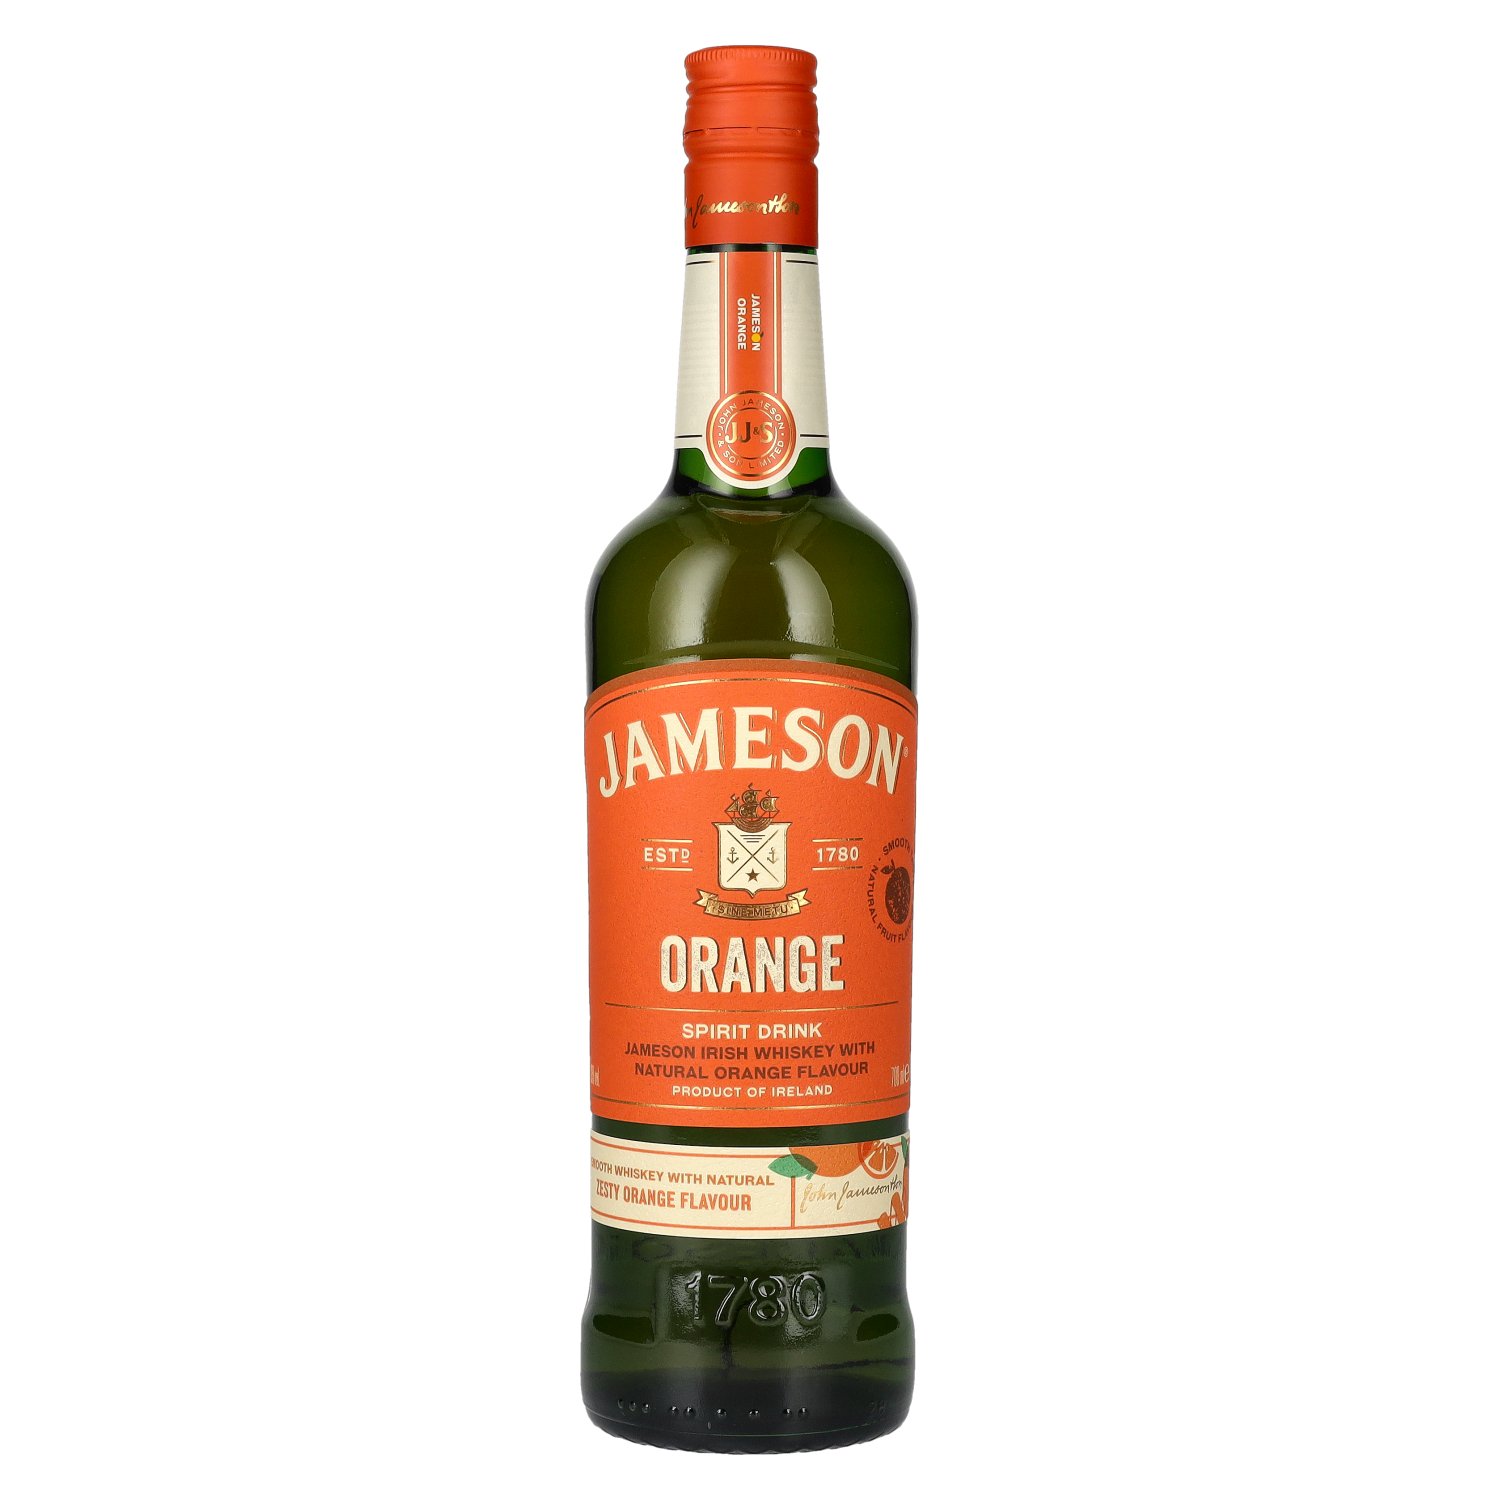 Jameson Orange 30% 0,7L